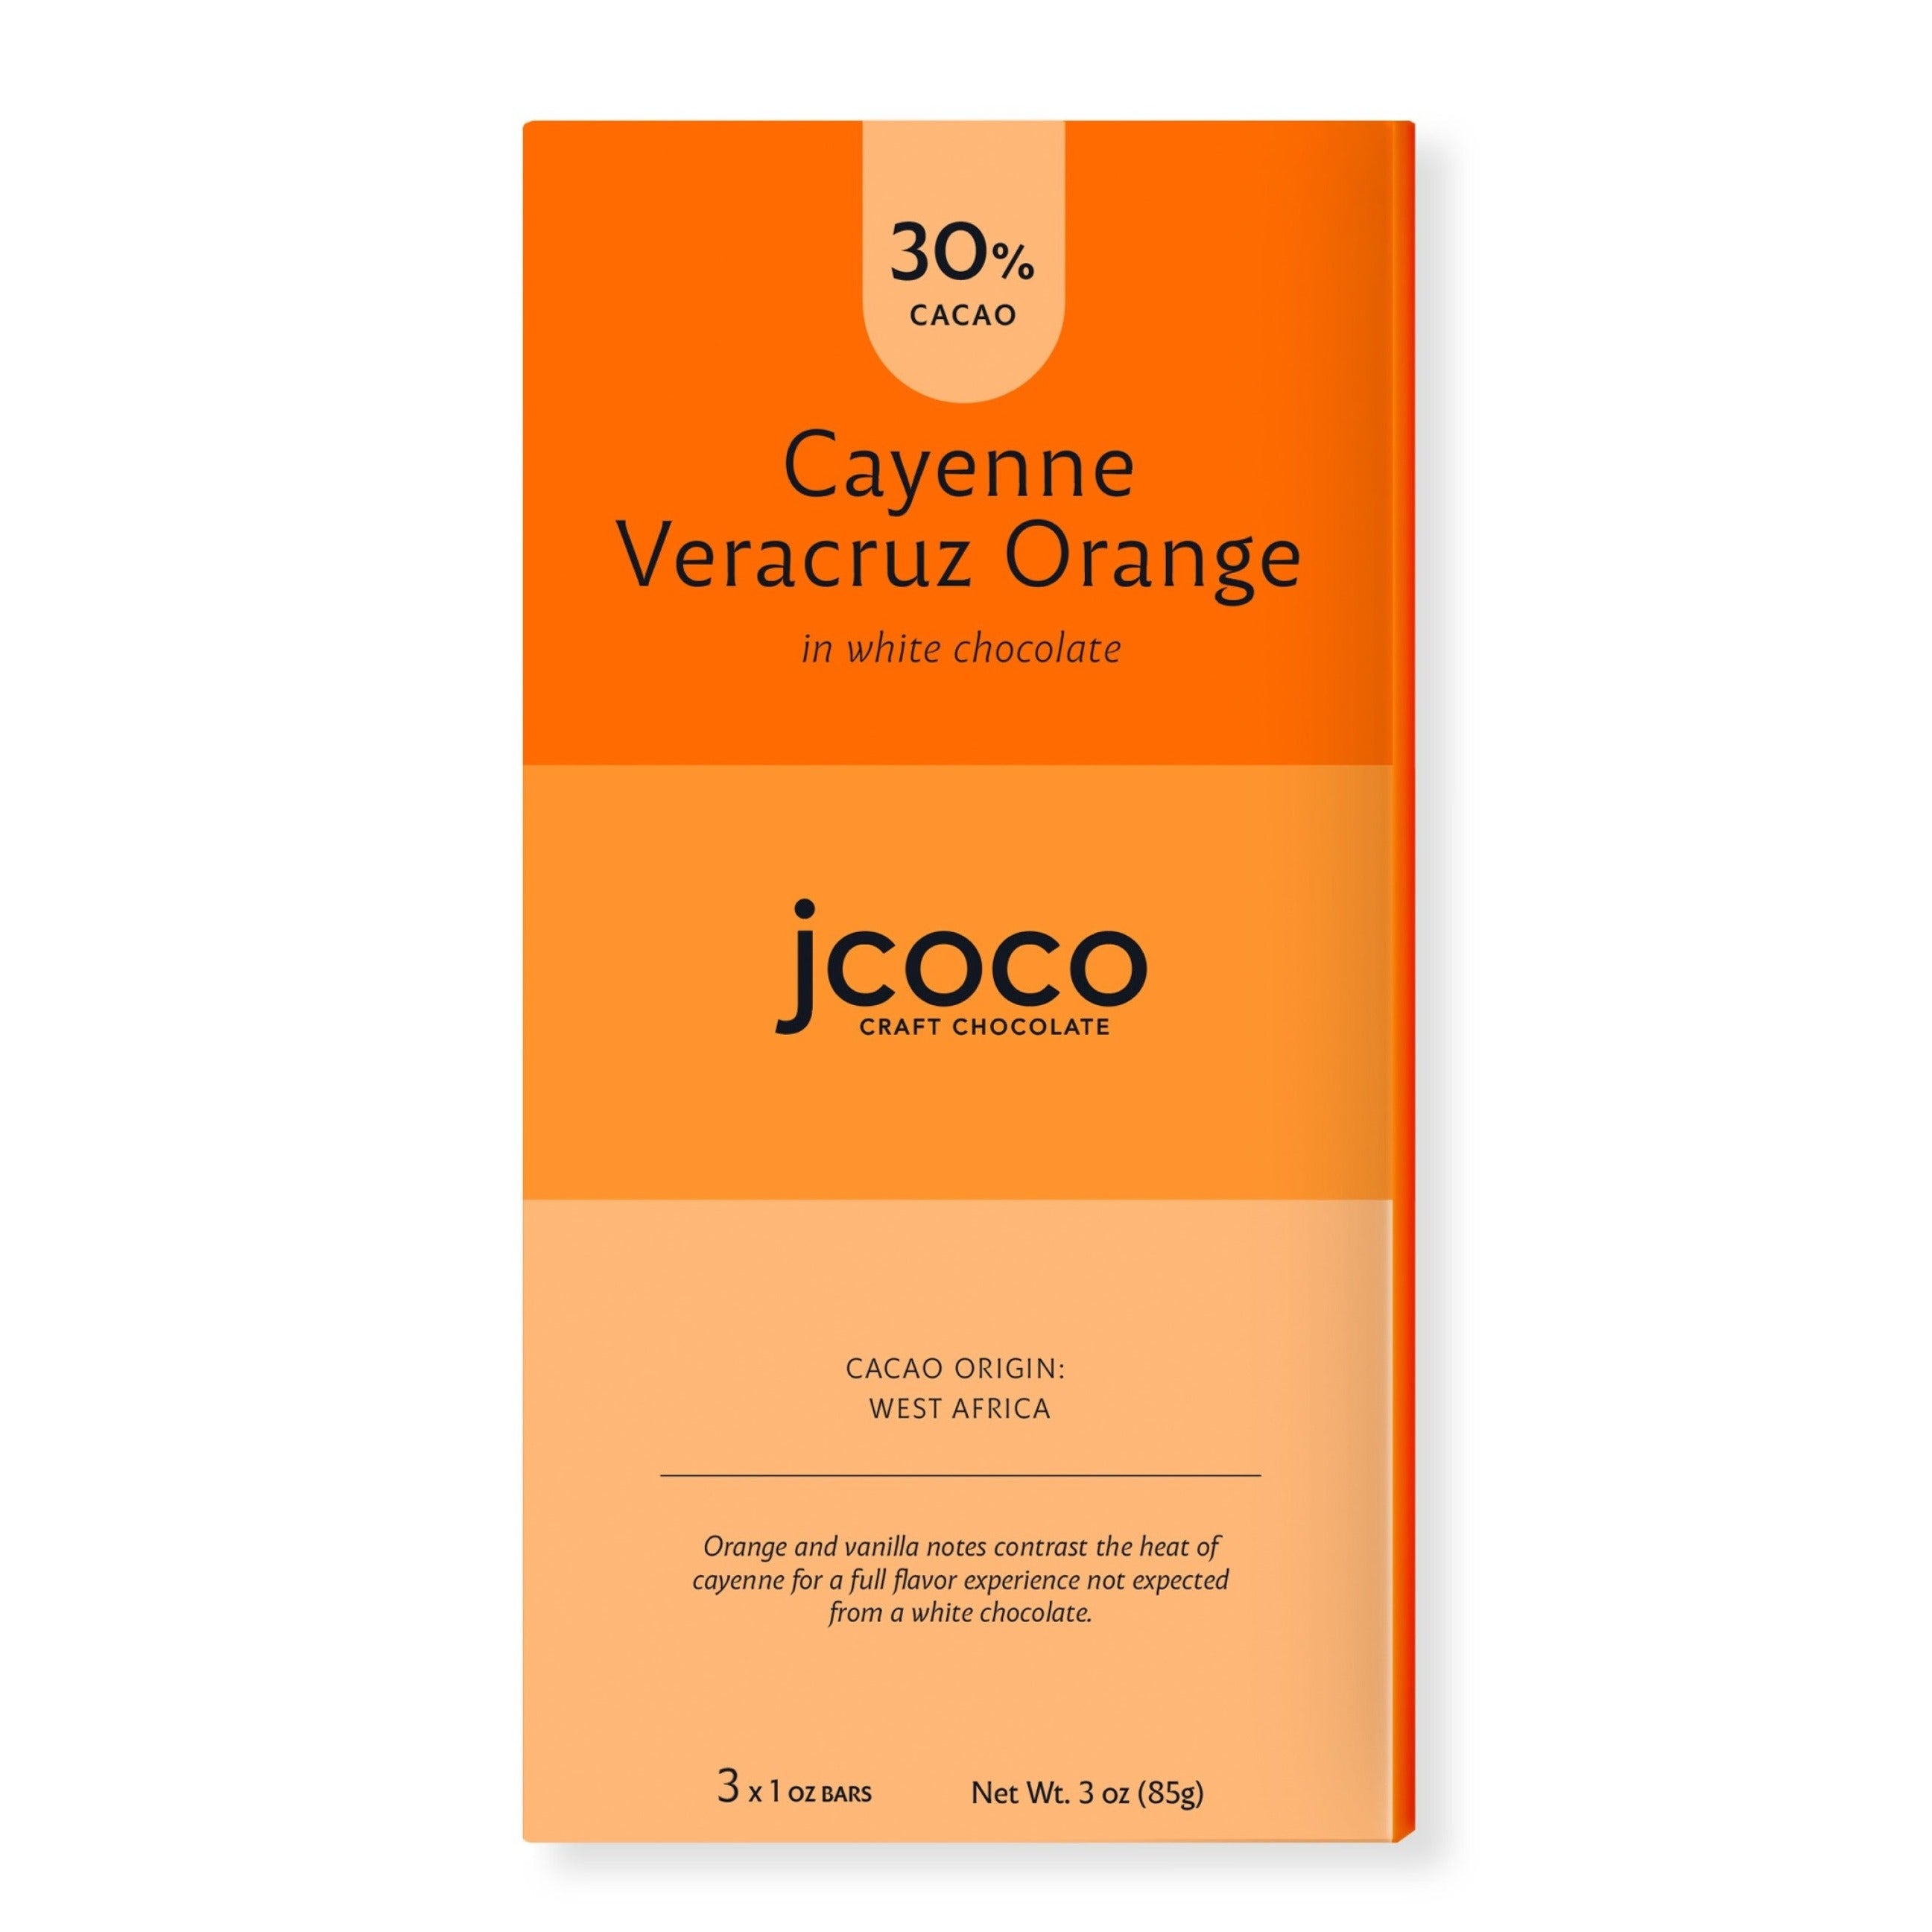 30% Cacao Cayenne veracruz orange 3oz chocolate bar